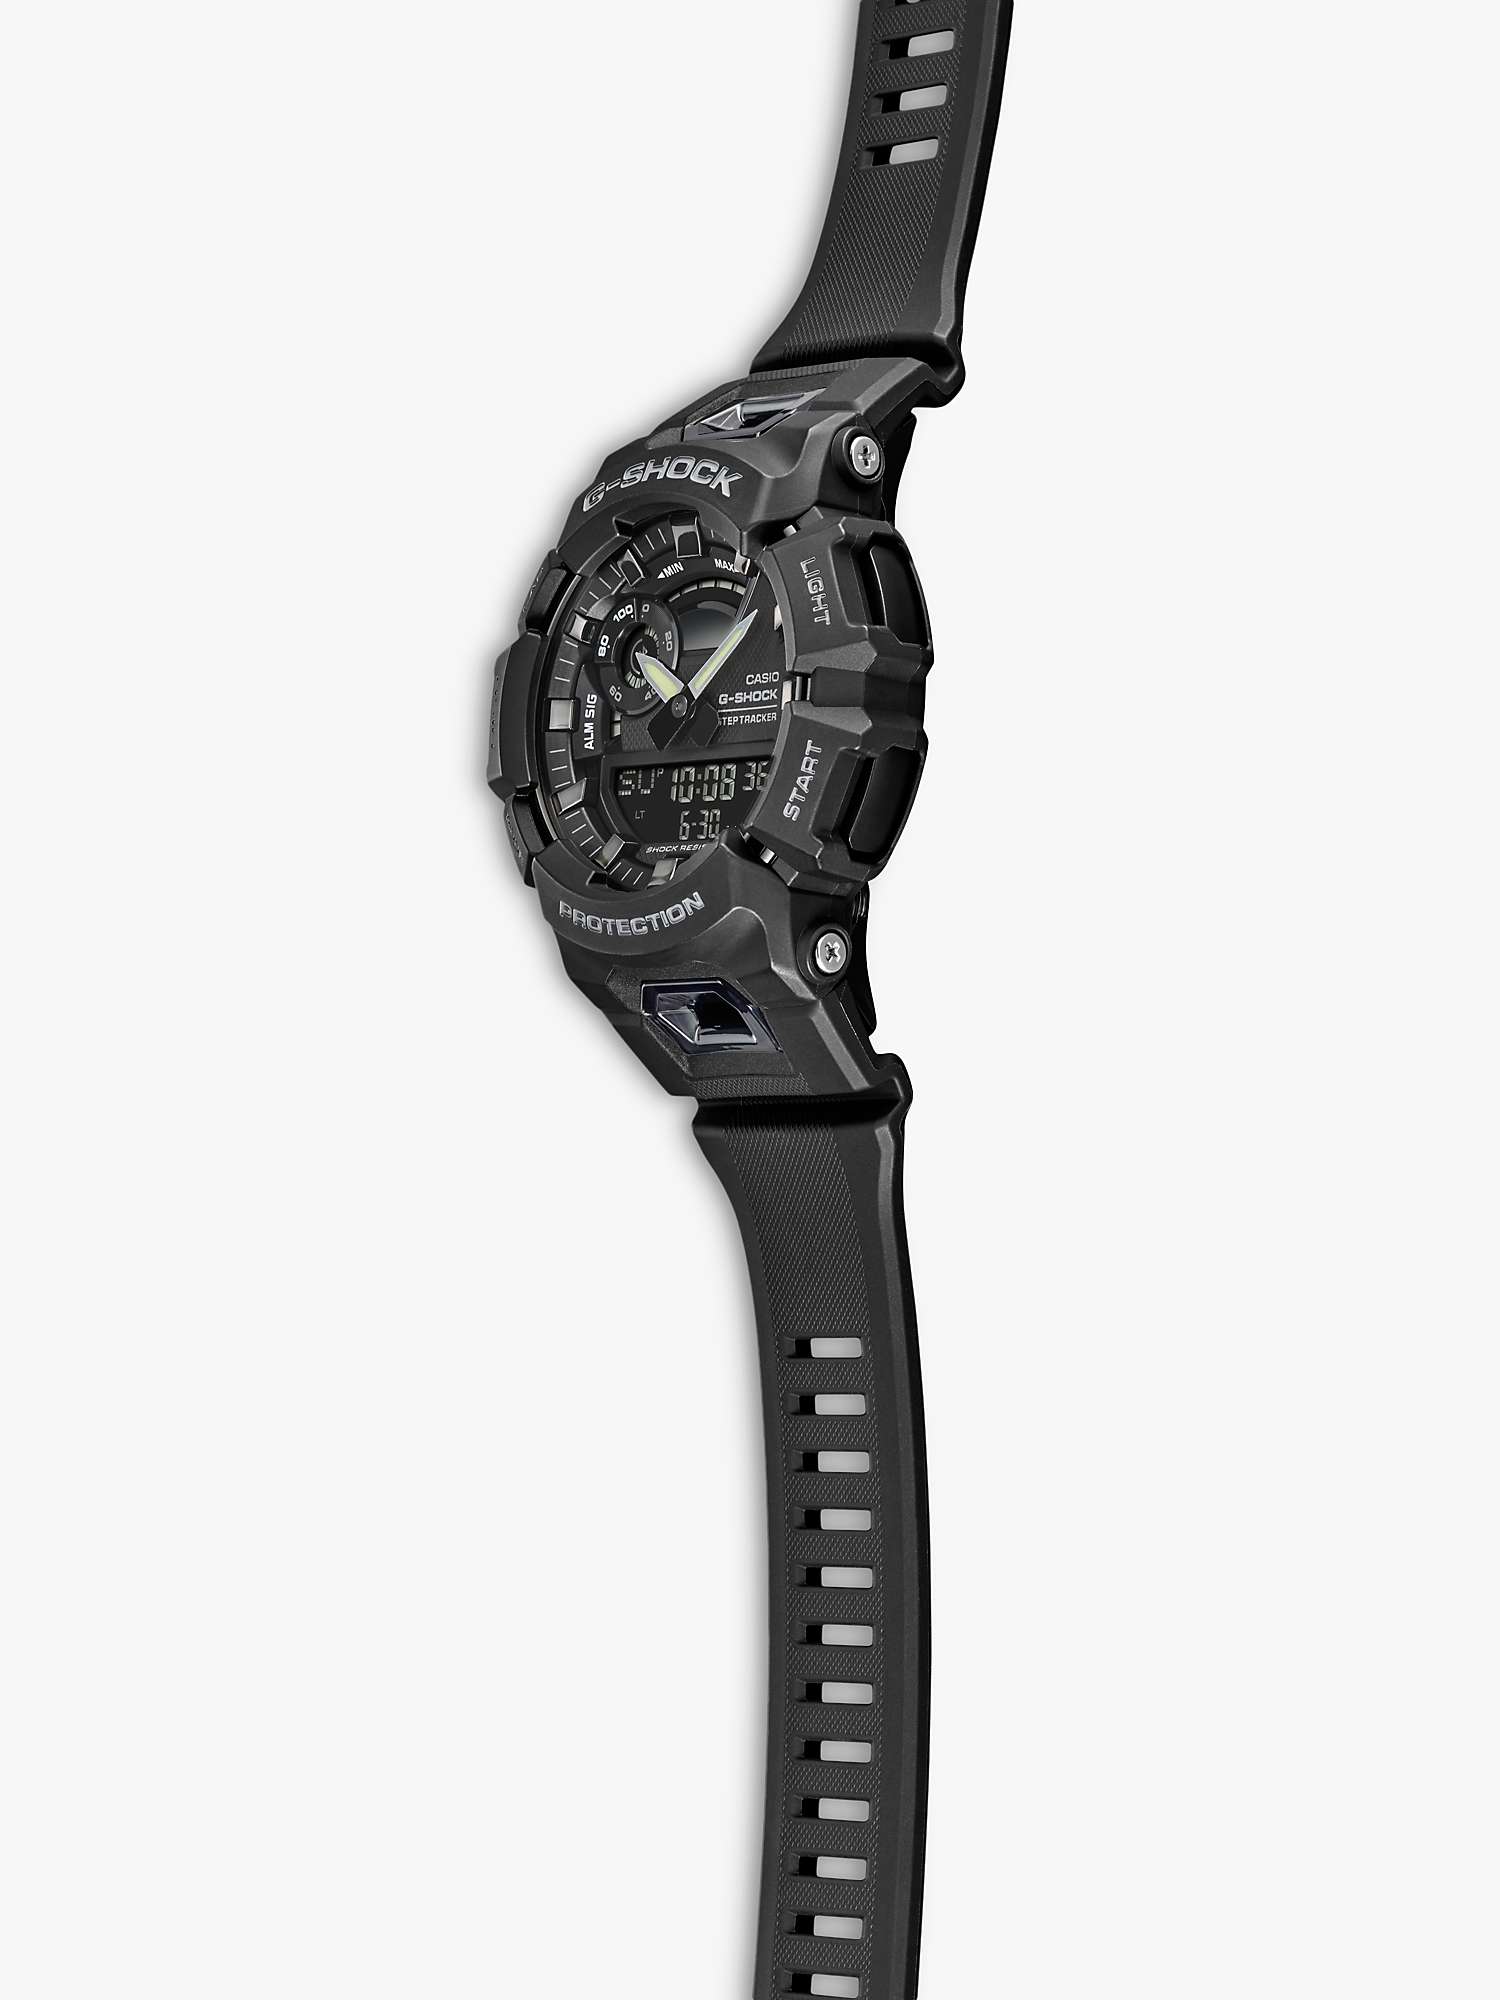 Buy Casio Men's G-Shock Resin Strap Smart Link Watch Online at johnlewis.com